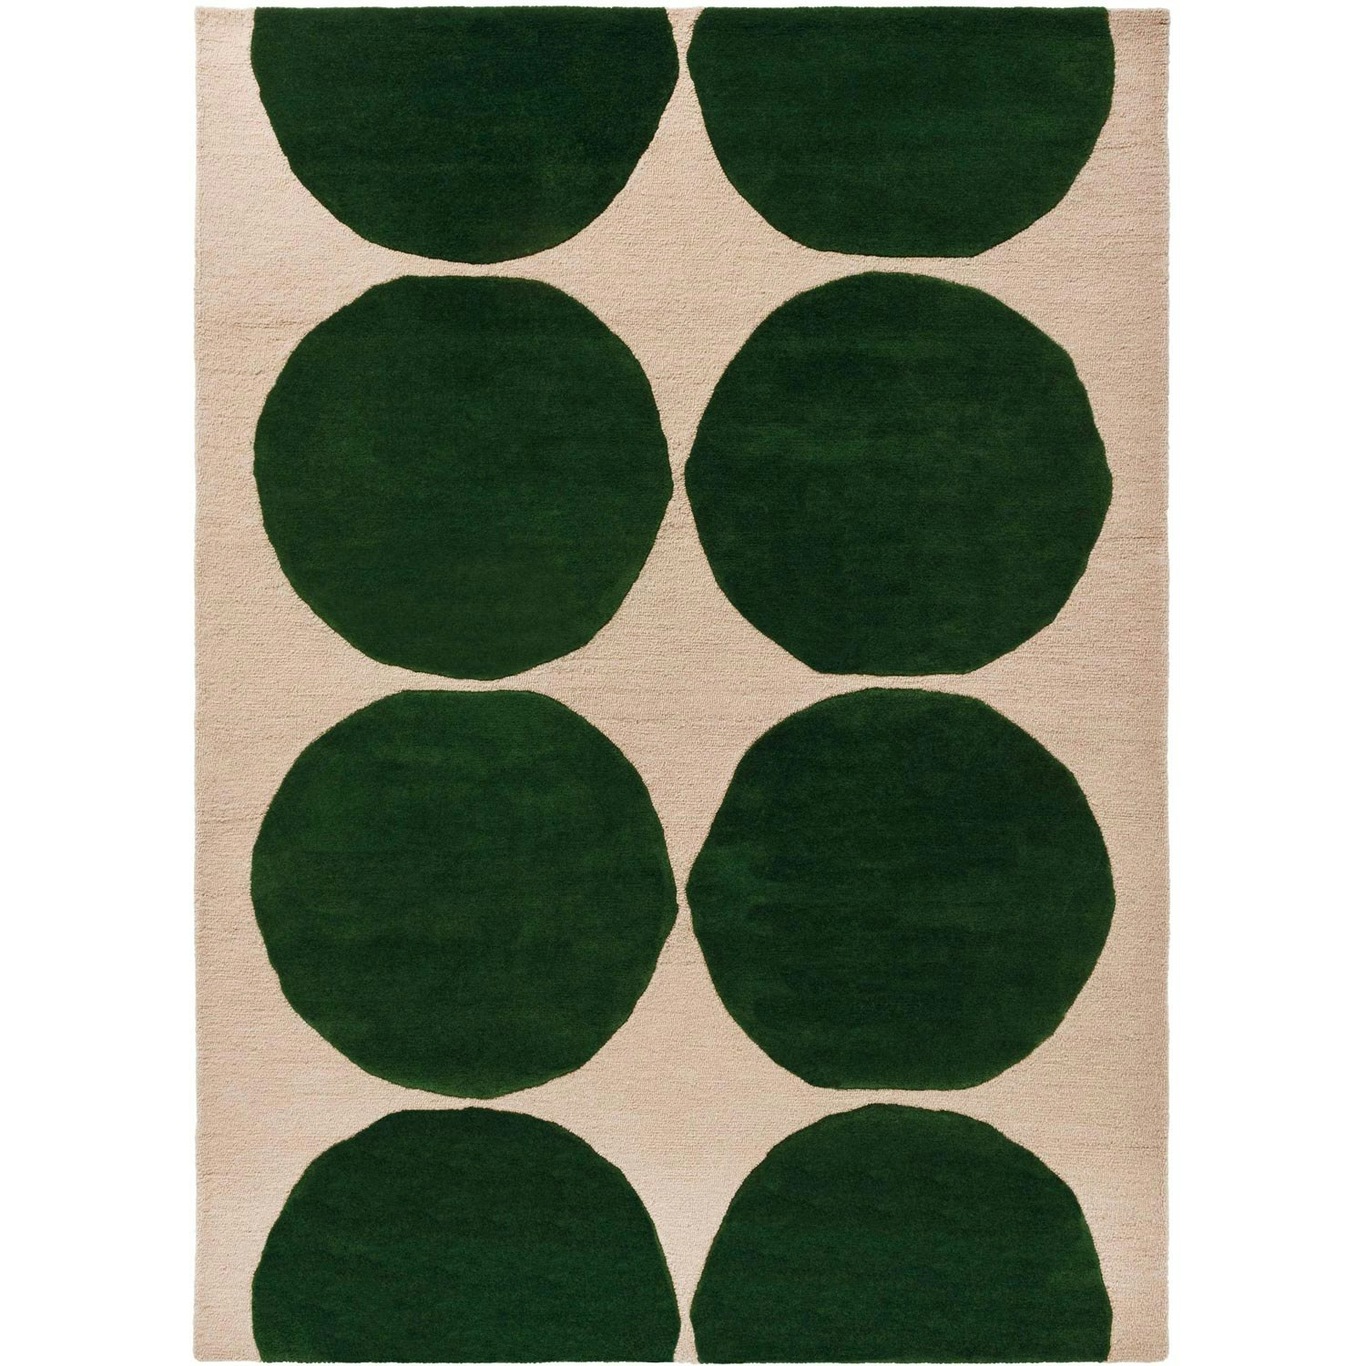 Marimekko Isot Kivet Rug 140x200 cm, Green